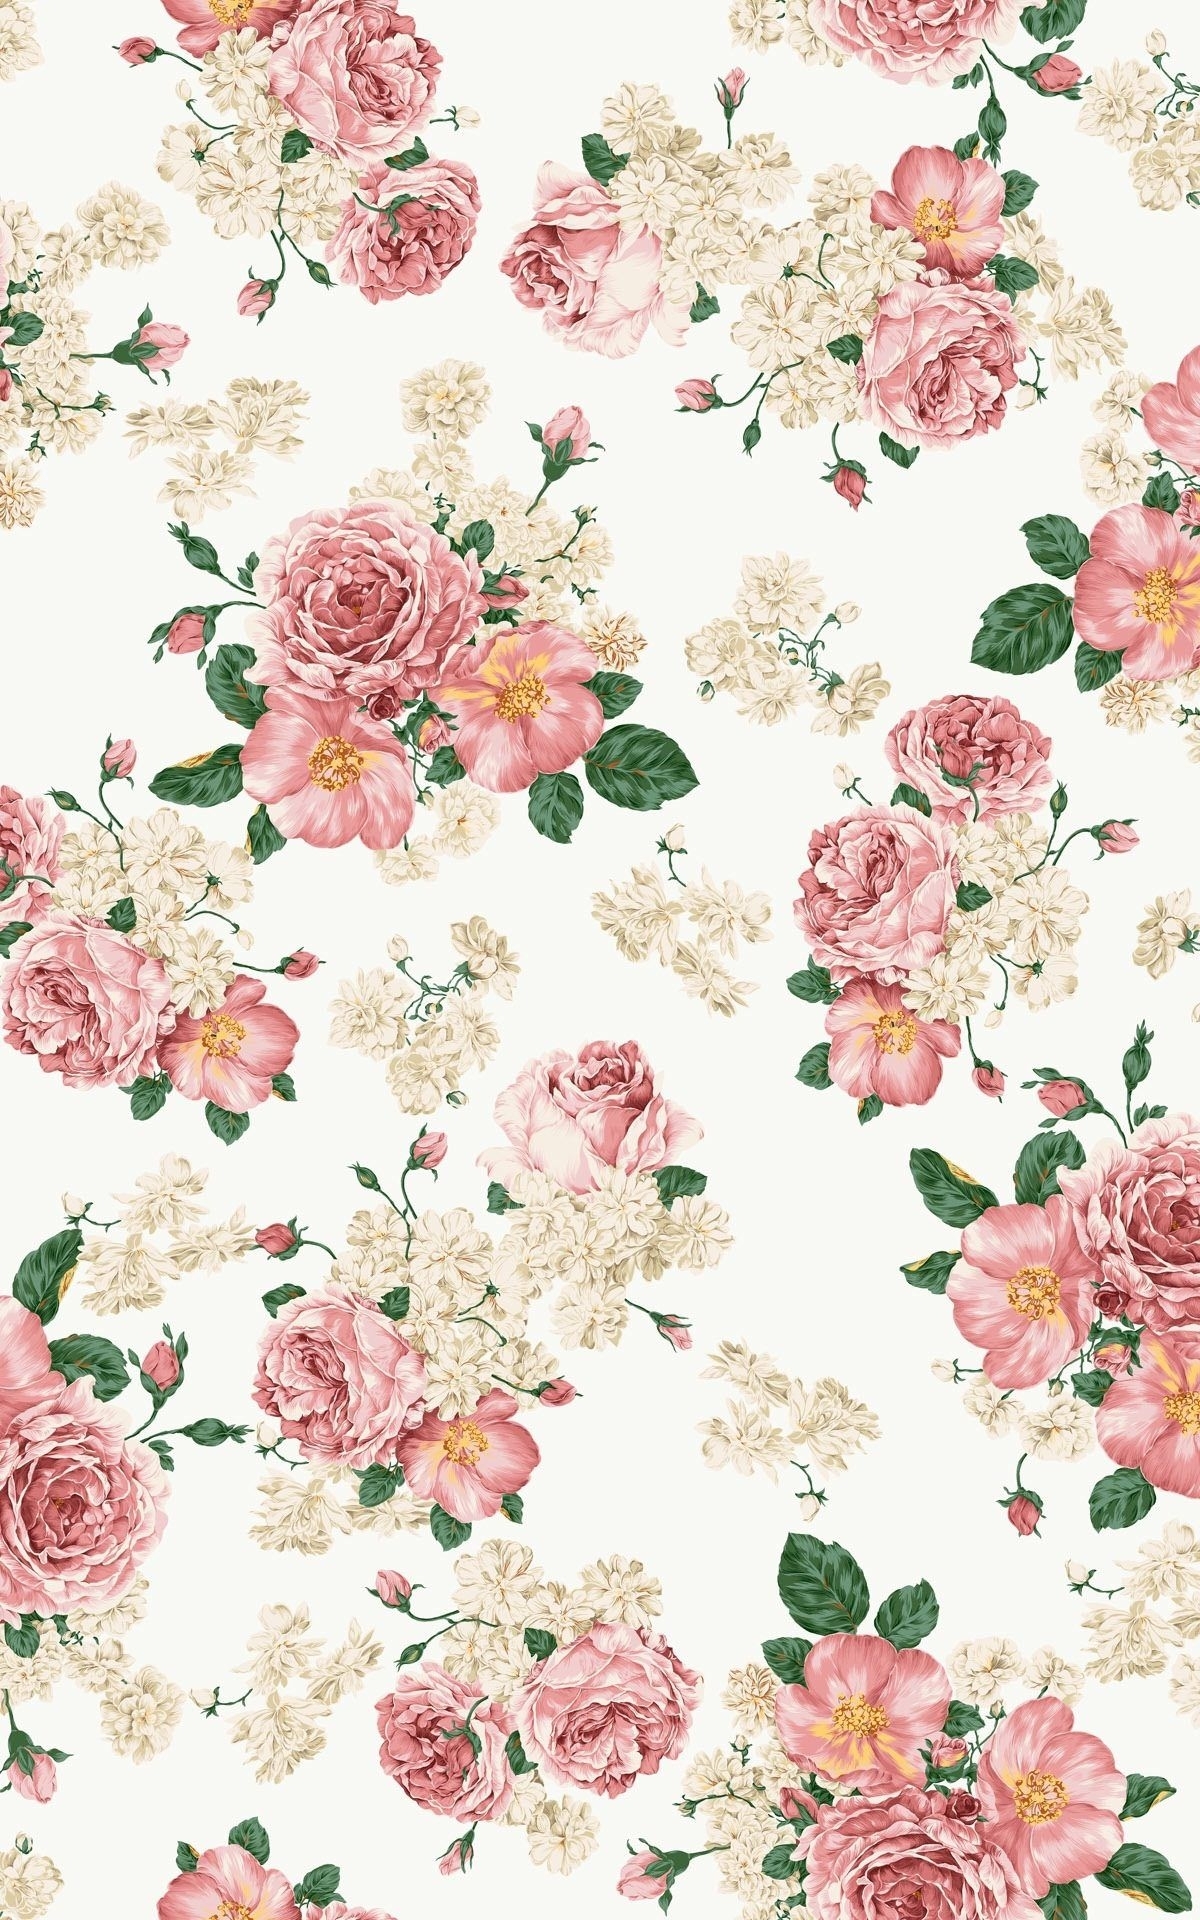 10 Best Vintage Pink Flower Wallpaper FULL HD 1920×1080 For PC Background